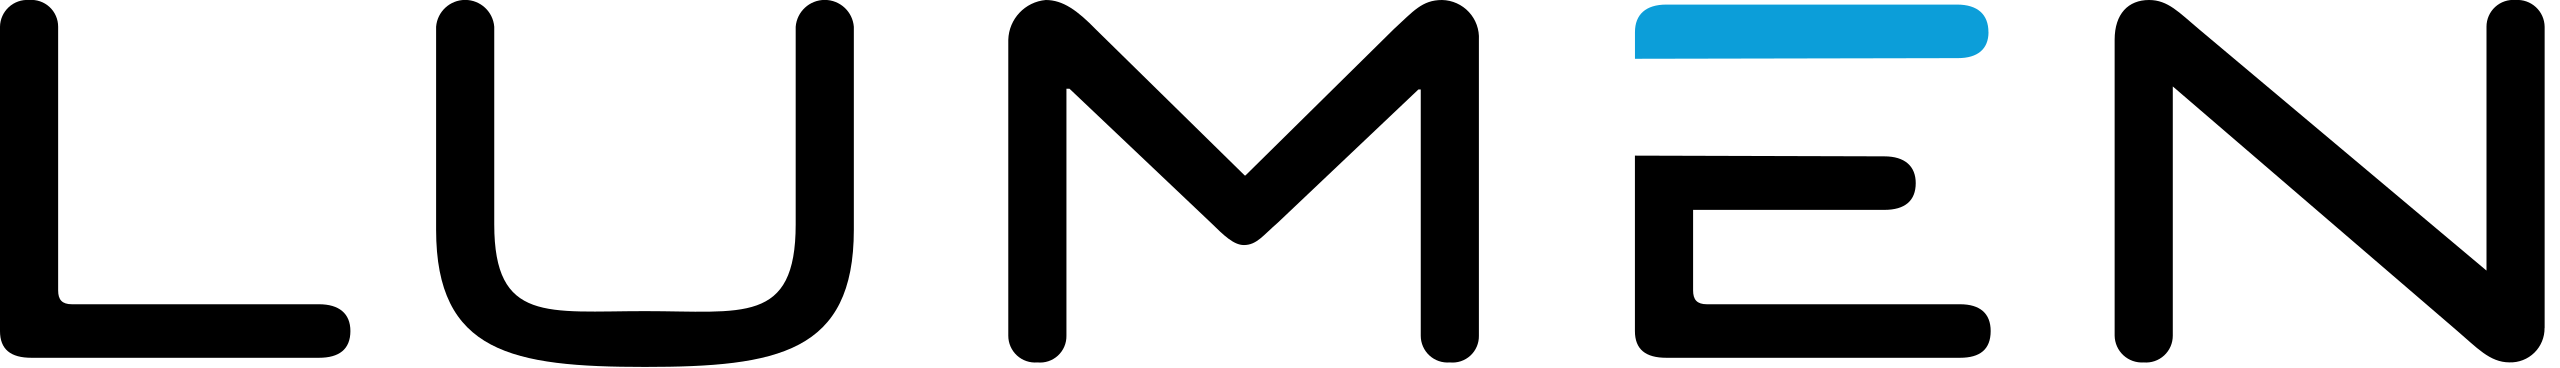 Lumen_Technologies_logo